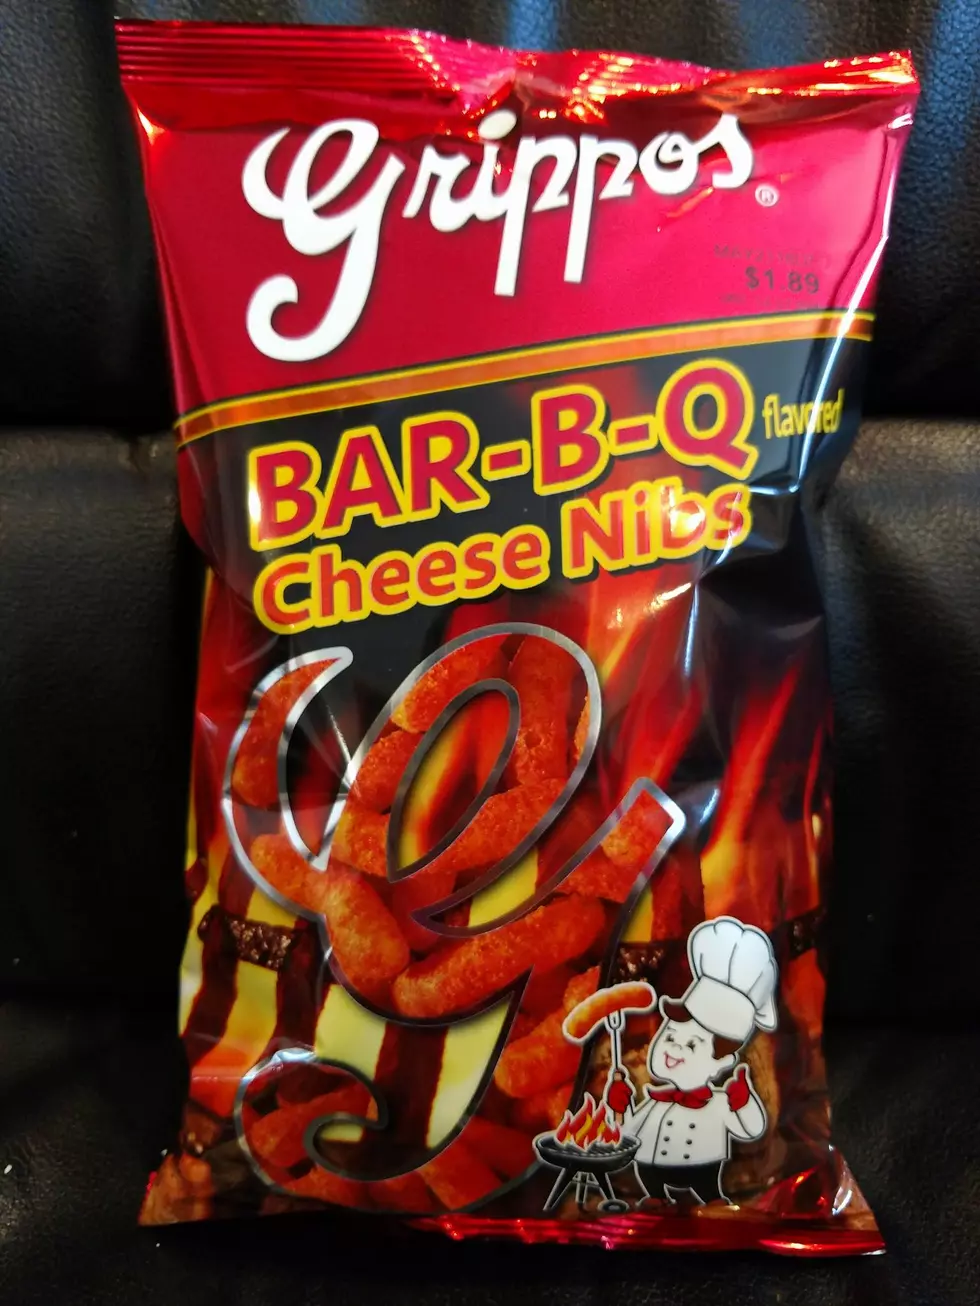 Grippo Potato Chip Company Announces a New Product